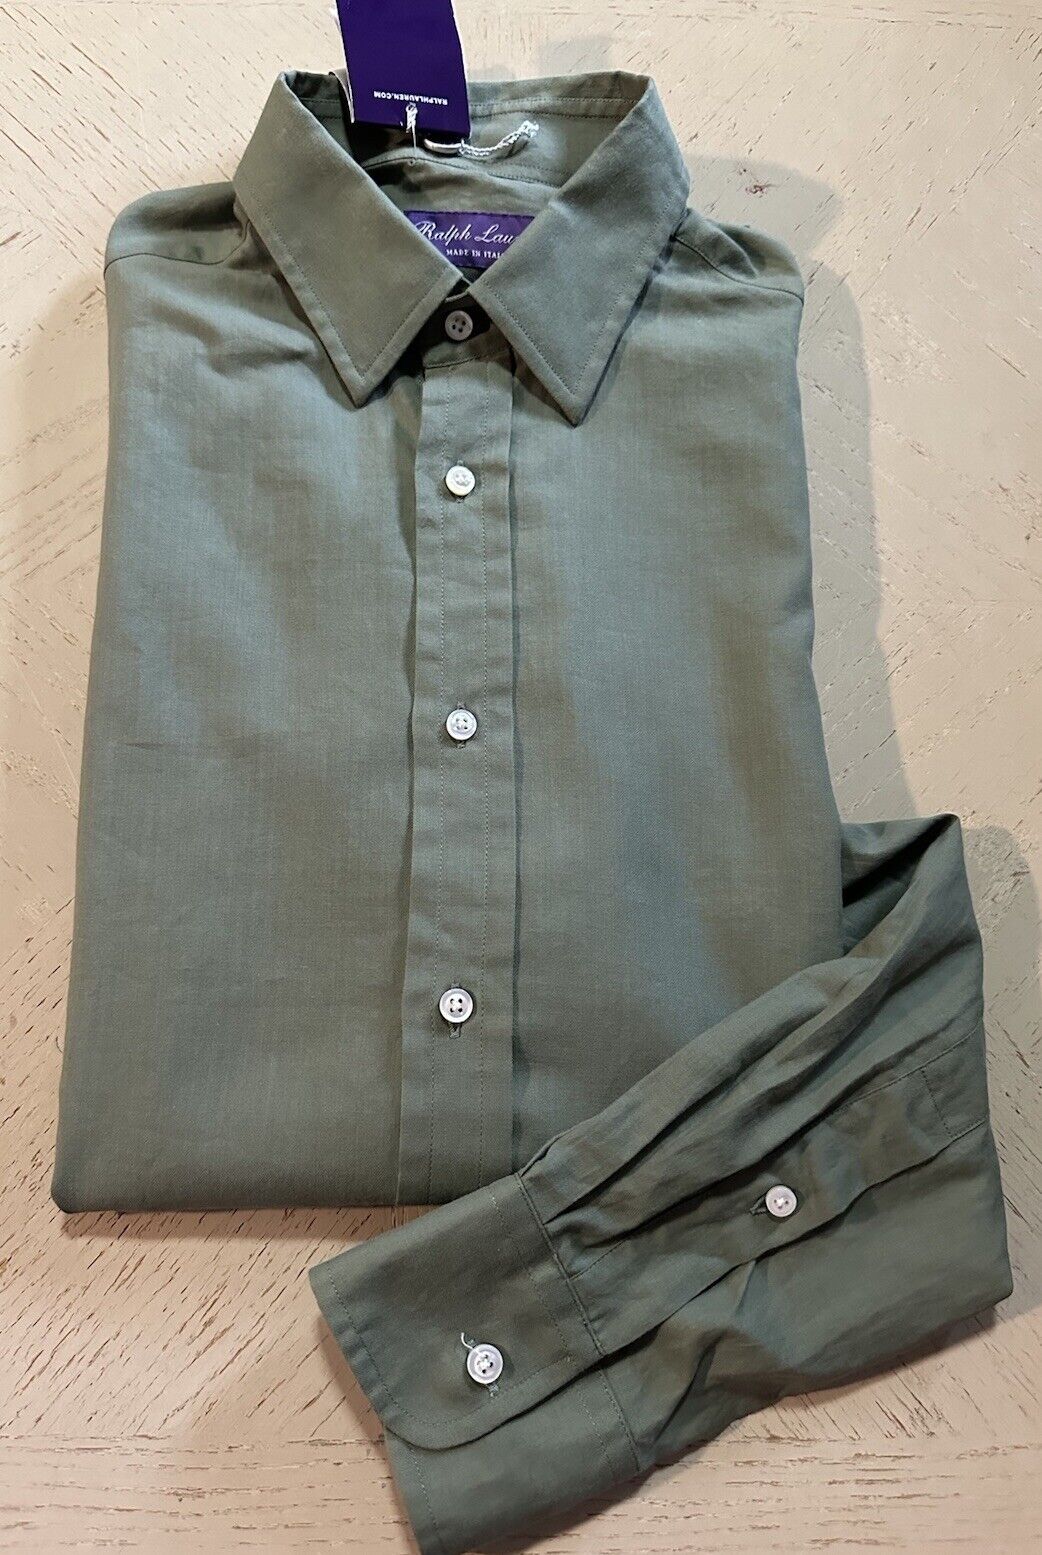 Ralph Lauren Purple Label Men’s Dress Shirt Size S Indigo Italy $495